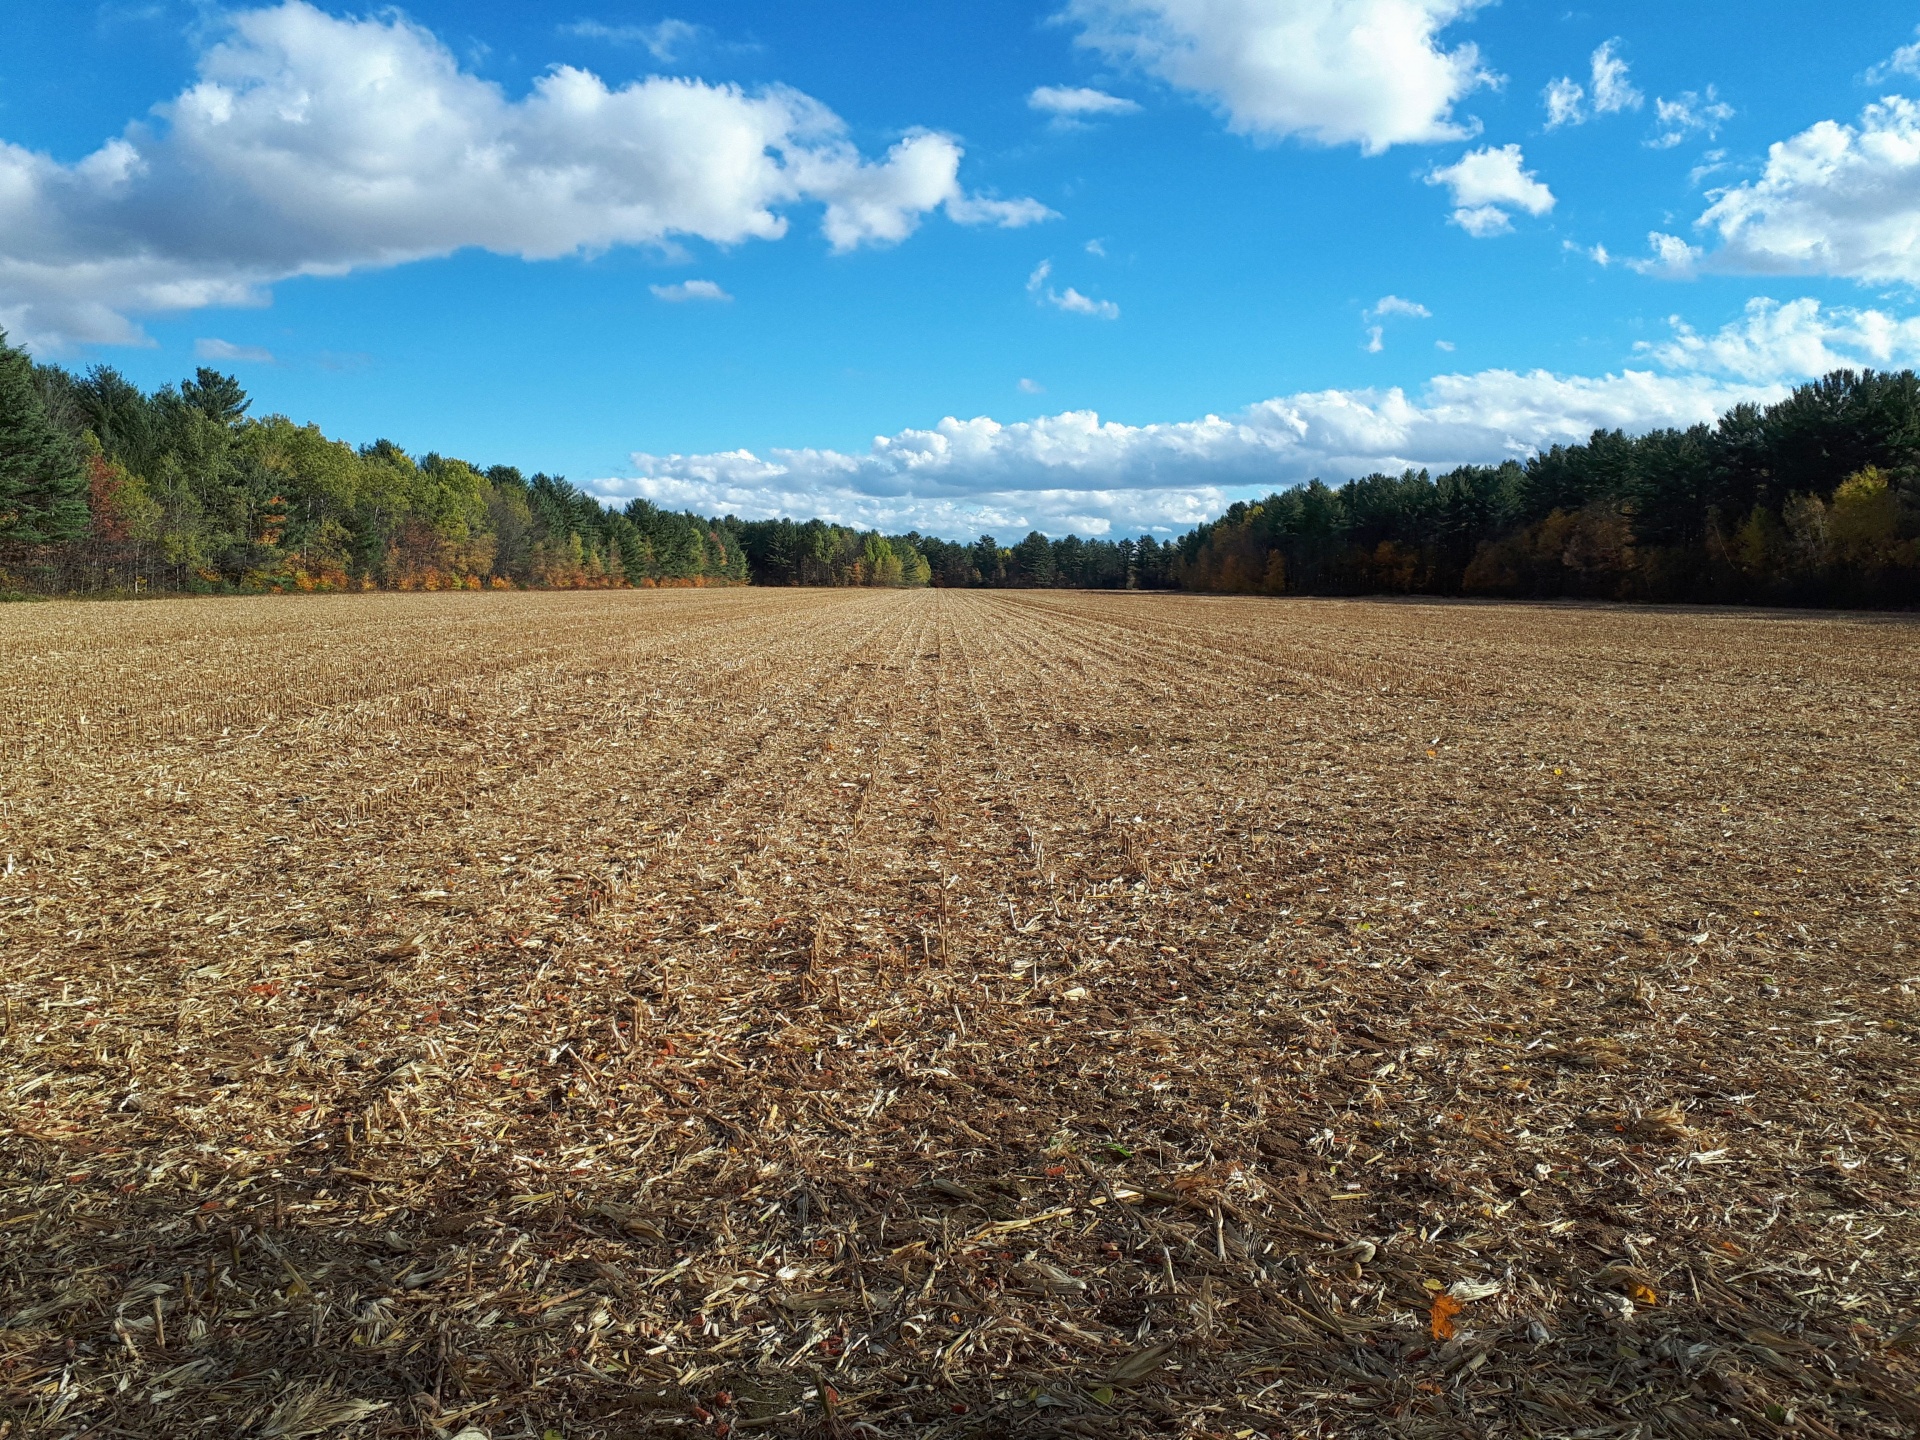 Landscape of corn fields after harvest